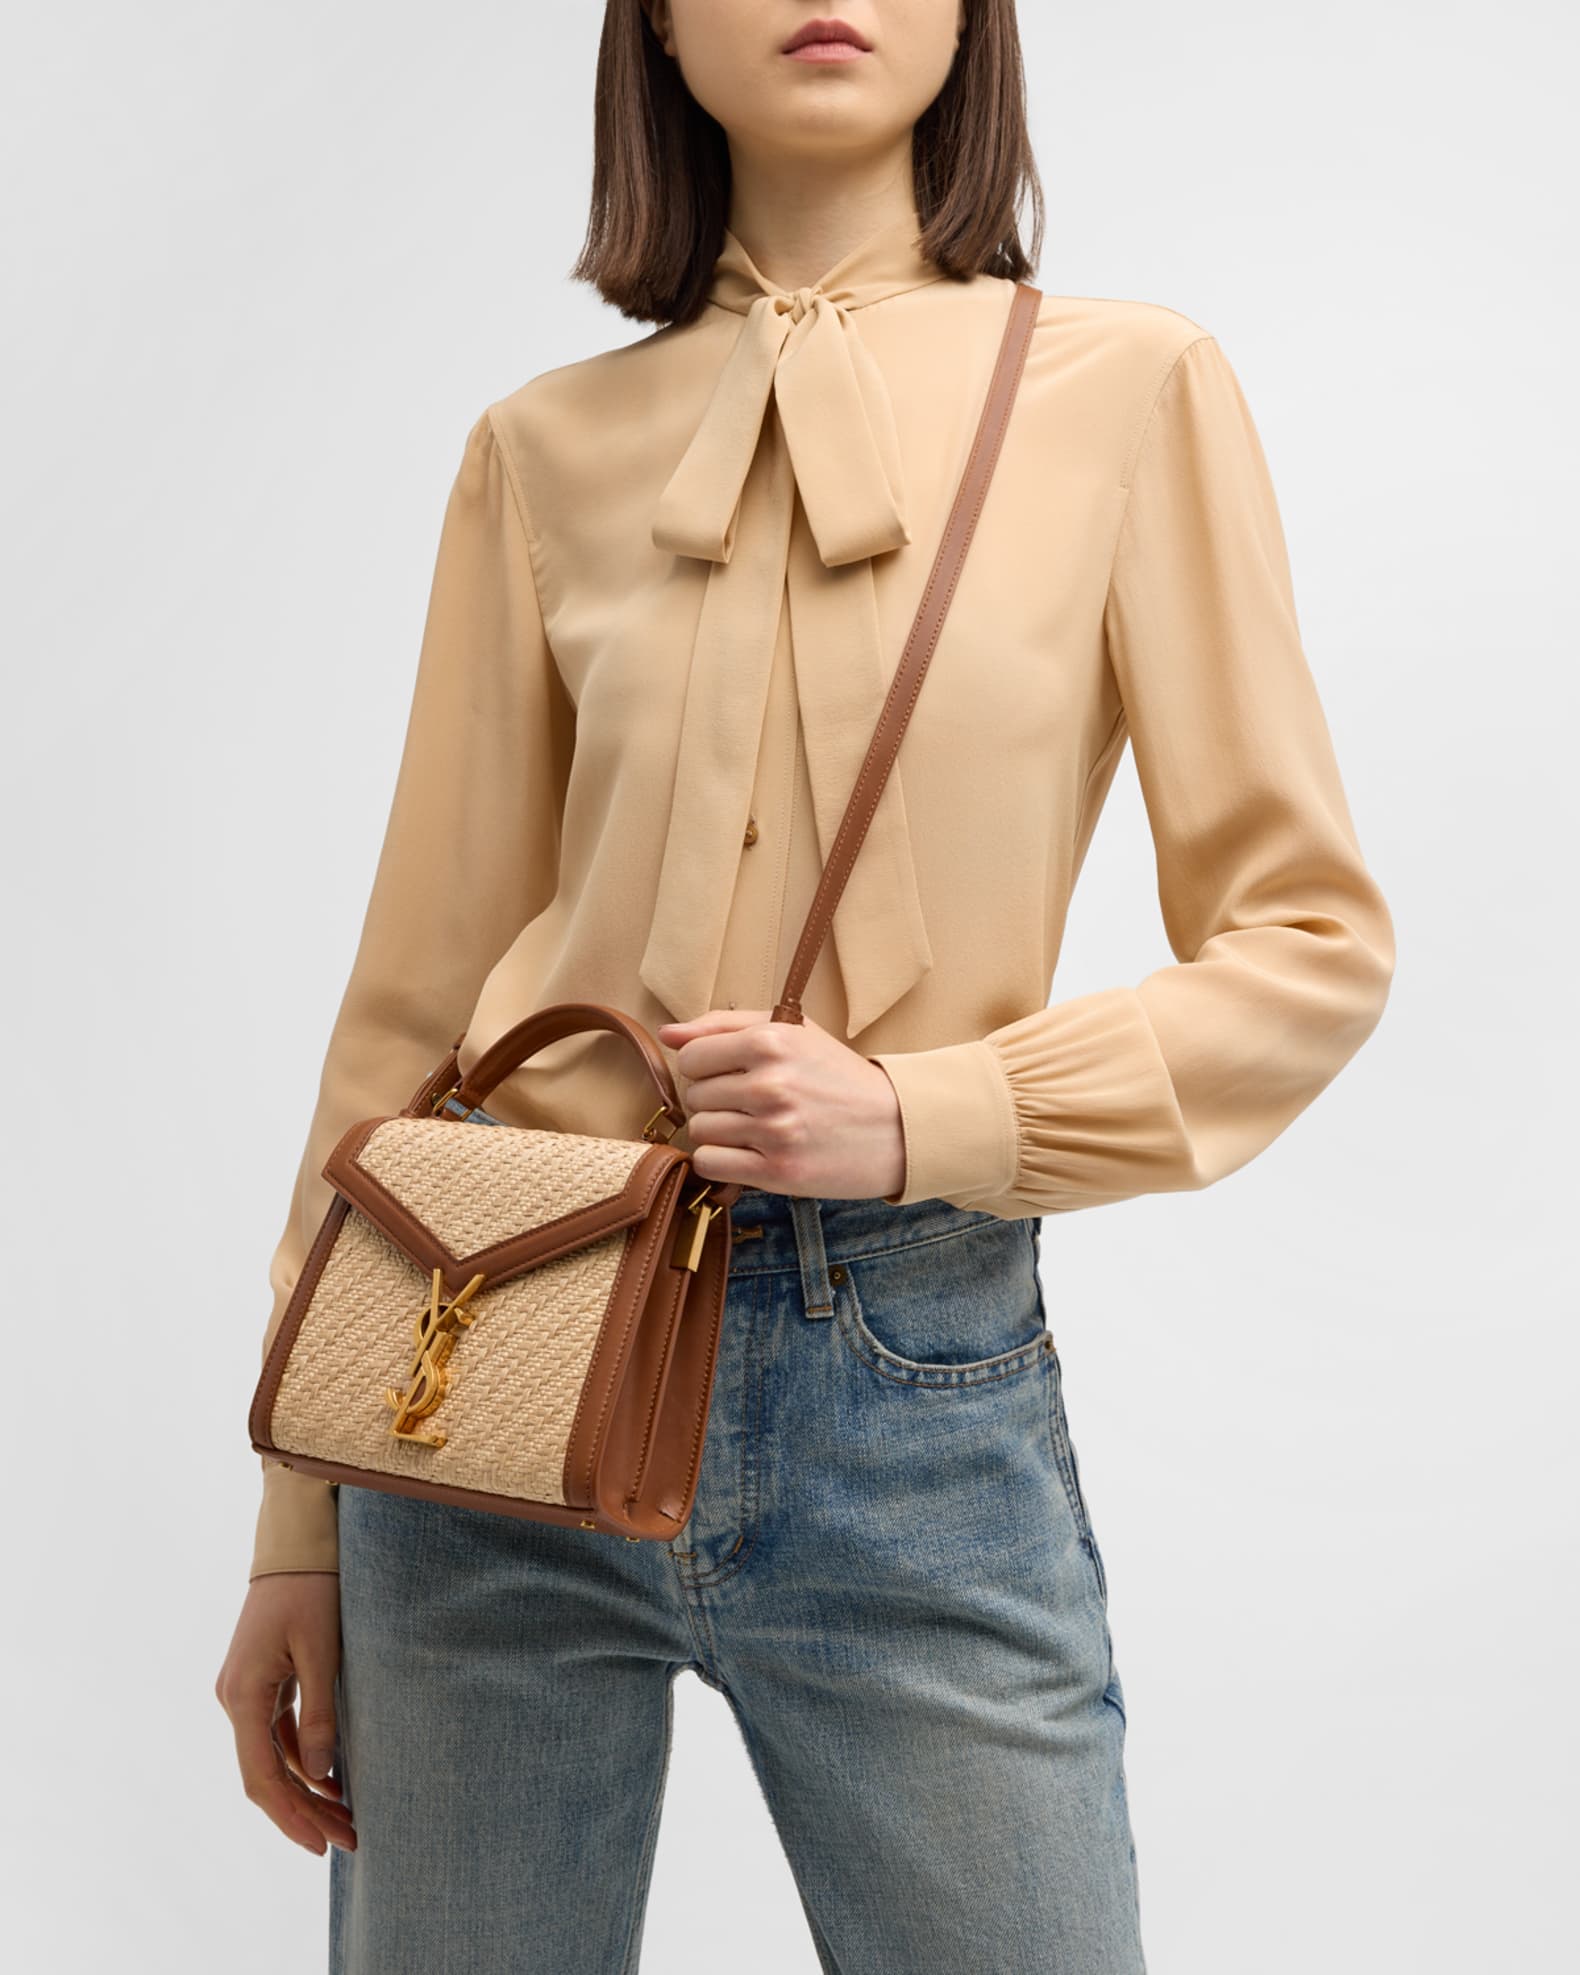 Saint Laurent Cassandra Mini Ysl Raffia Top-handle Bag In Nero